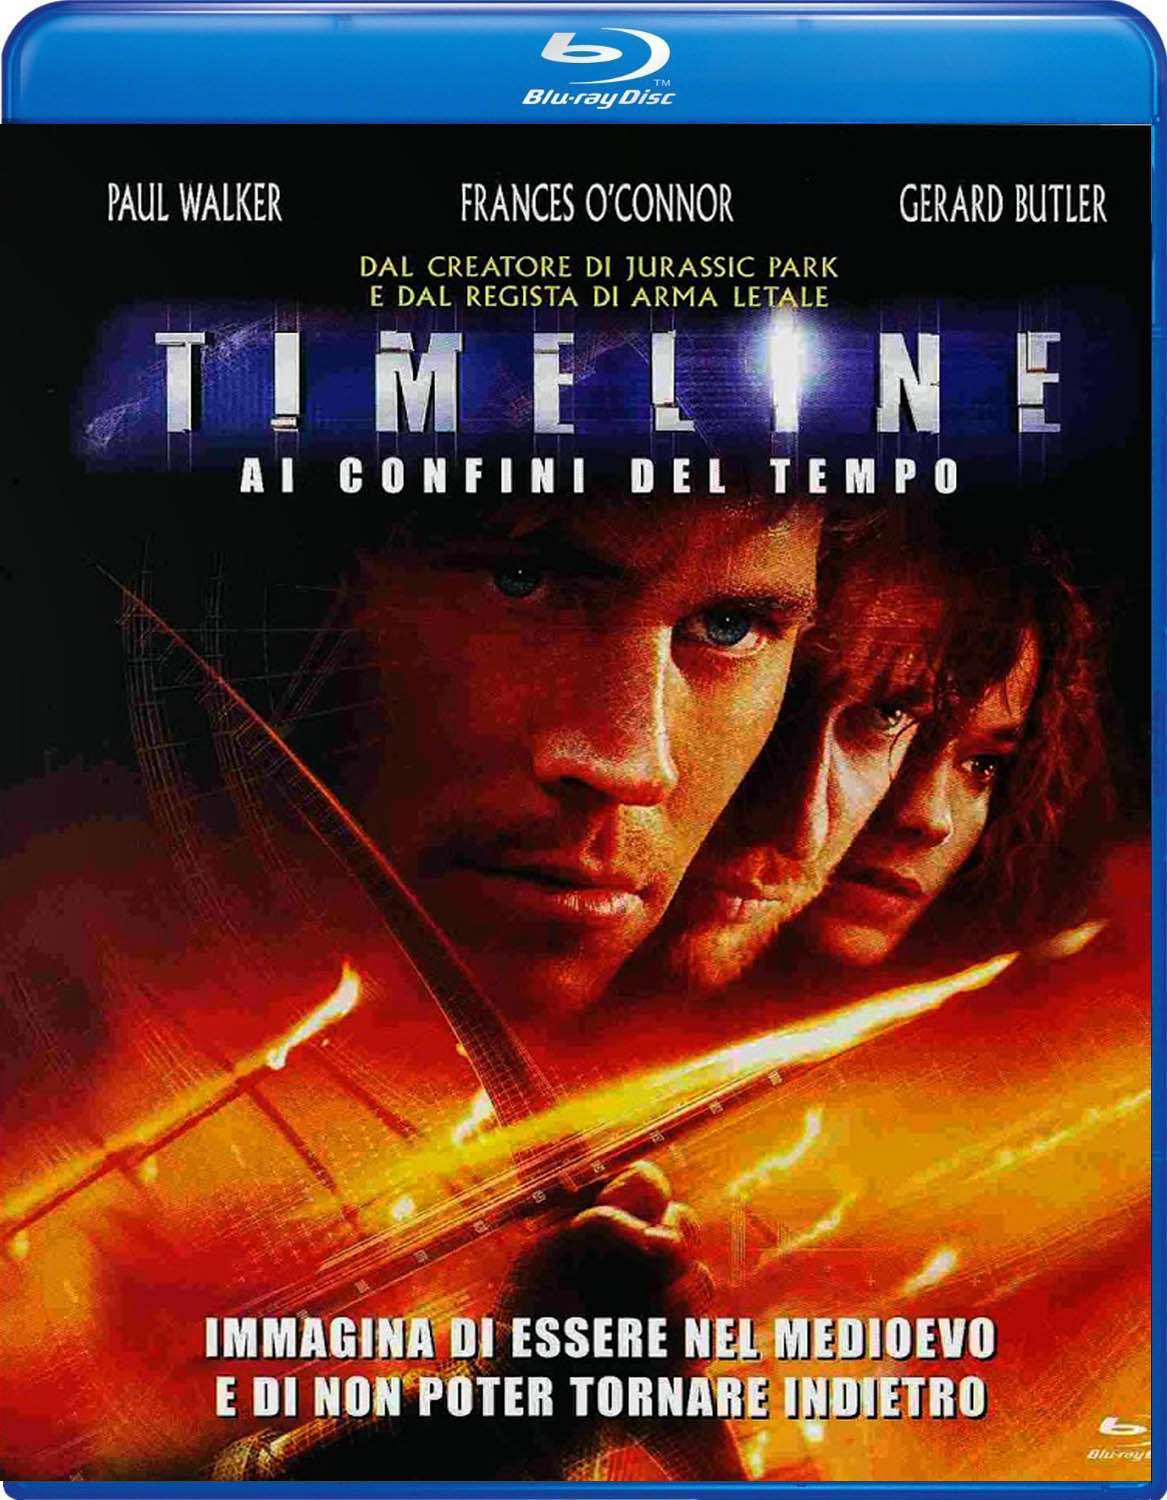 Timeline - Ai confini del tempo (2003) FullHD BDRip 1080p TrueHD DTS Ac3 ITA ENG Sub ITA x264 - DDN